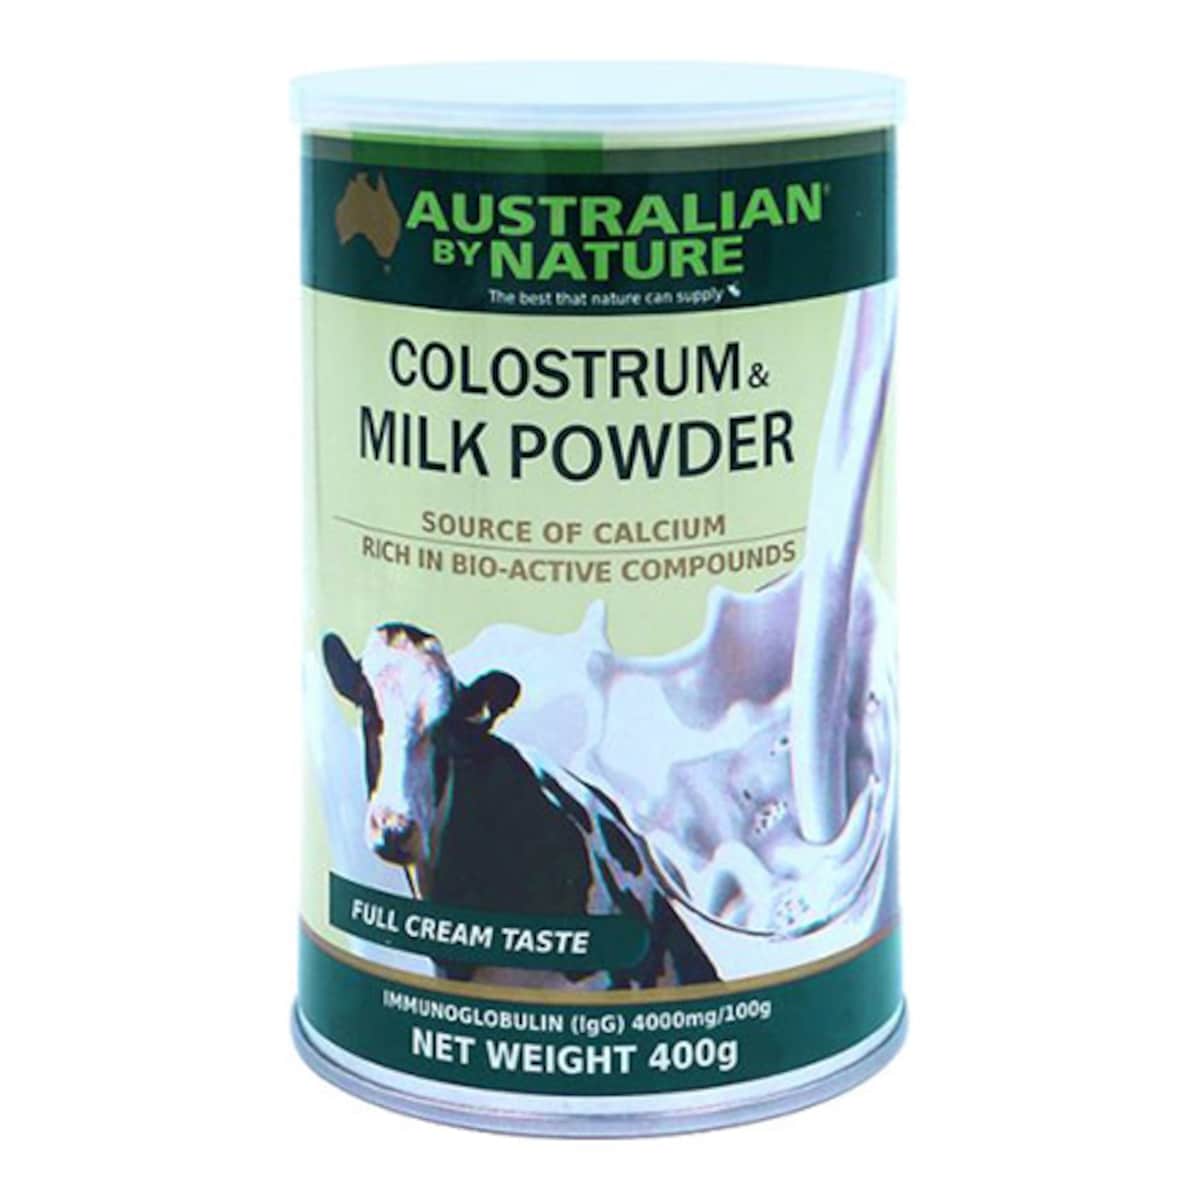 Australian by Nature Colostrum & Milk Powder 400g Australia